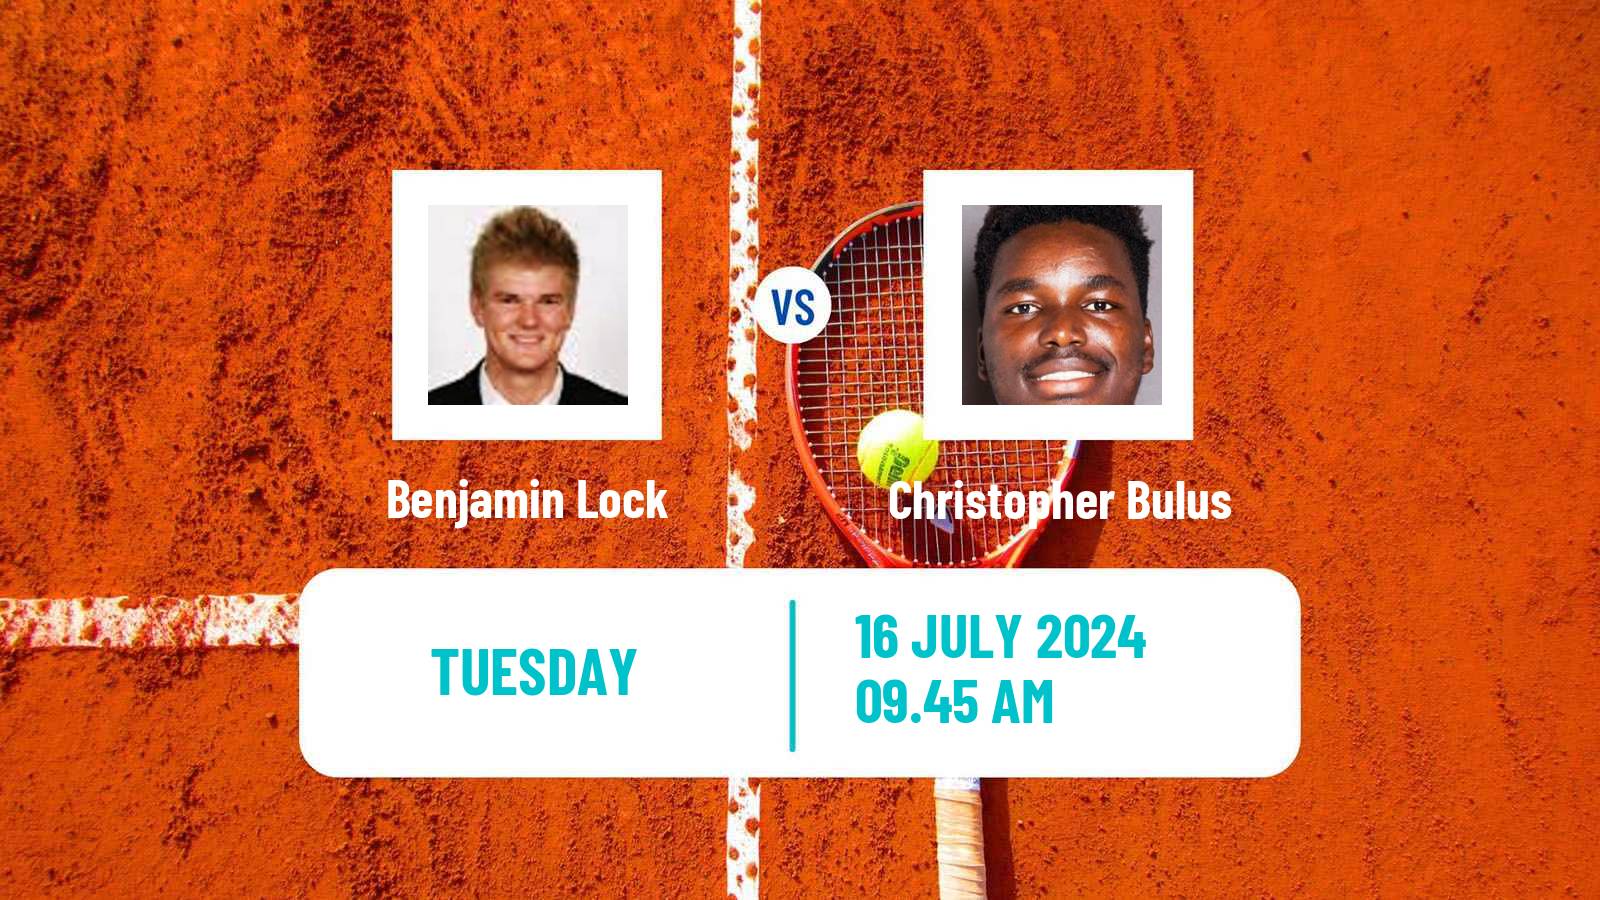 Tennis Davis Cup Group III Benjamin Lock - Christopher Bulus